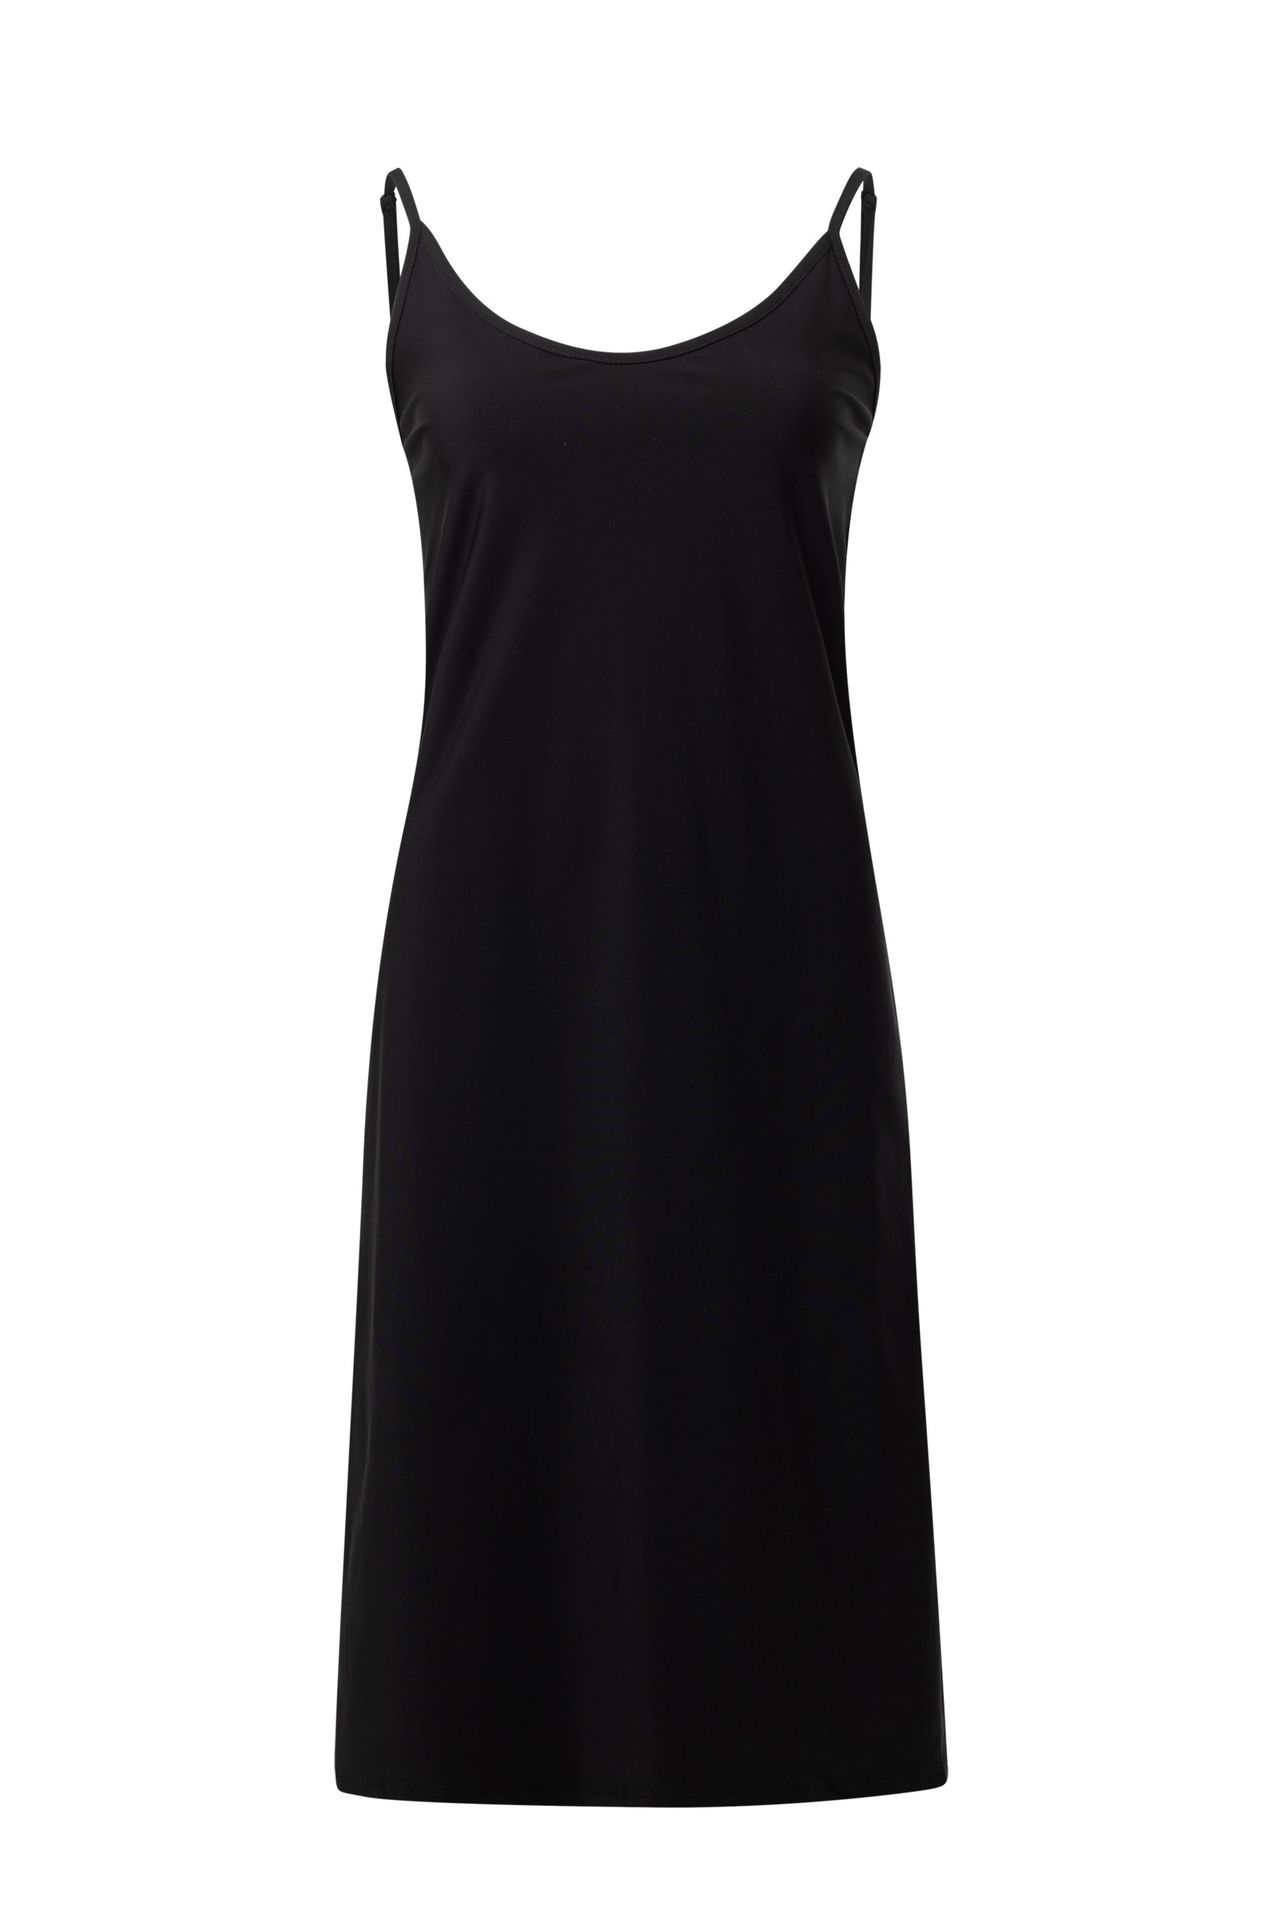  Midi jurk zwart travelstof black 213471-001-36